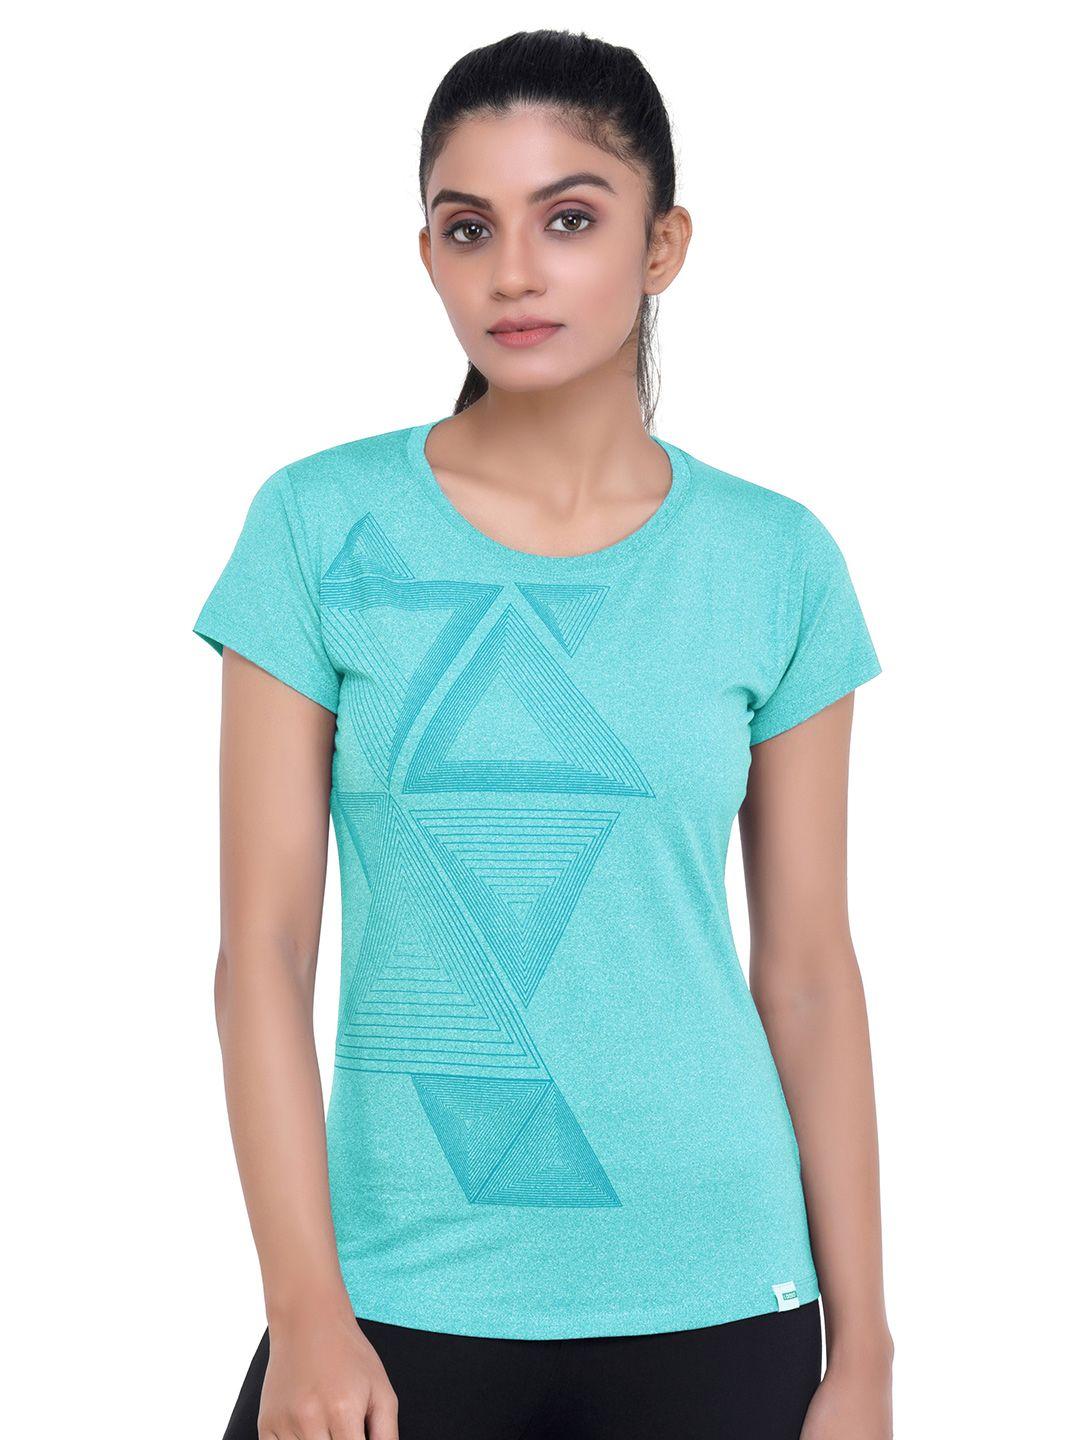 laasa sports women turquoise blue geometric printed dry-fit training or gym t-shirt